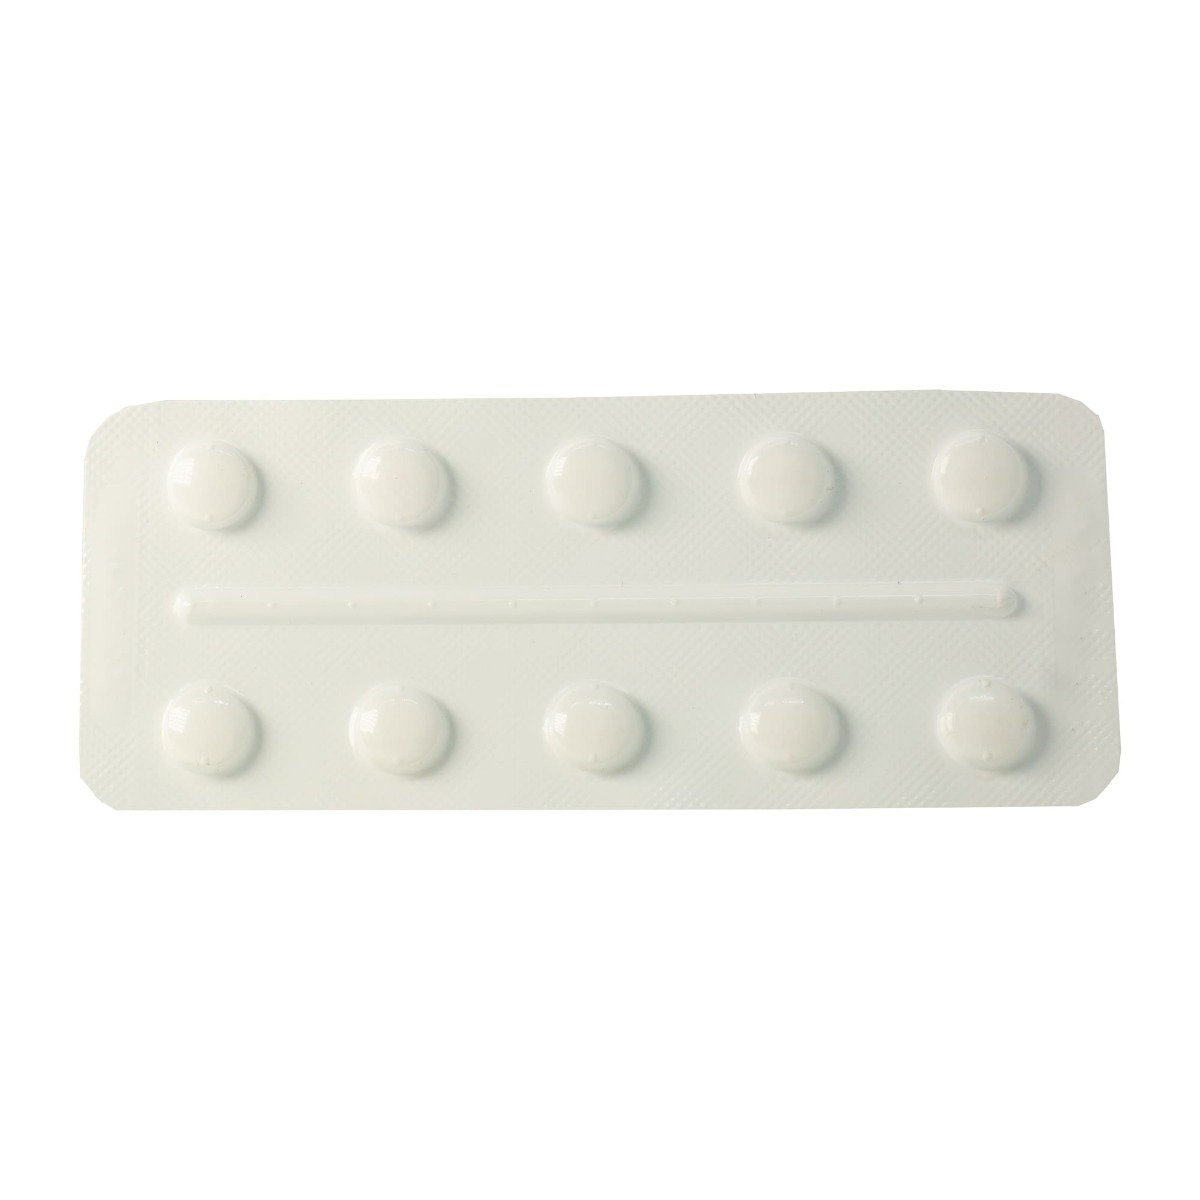 Examide 5 mg - 30 Tablets - Bloom Pharmacy